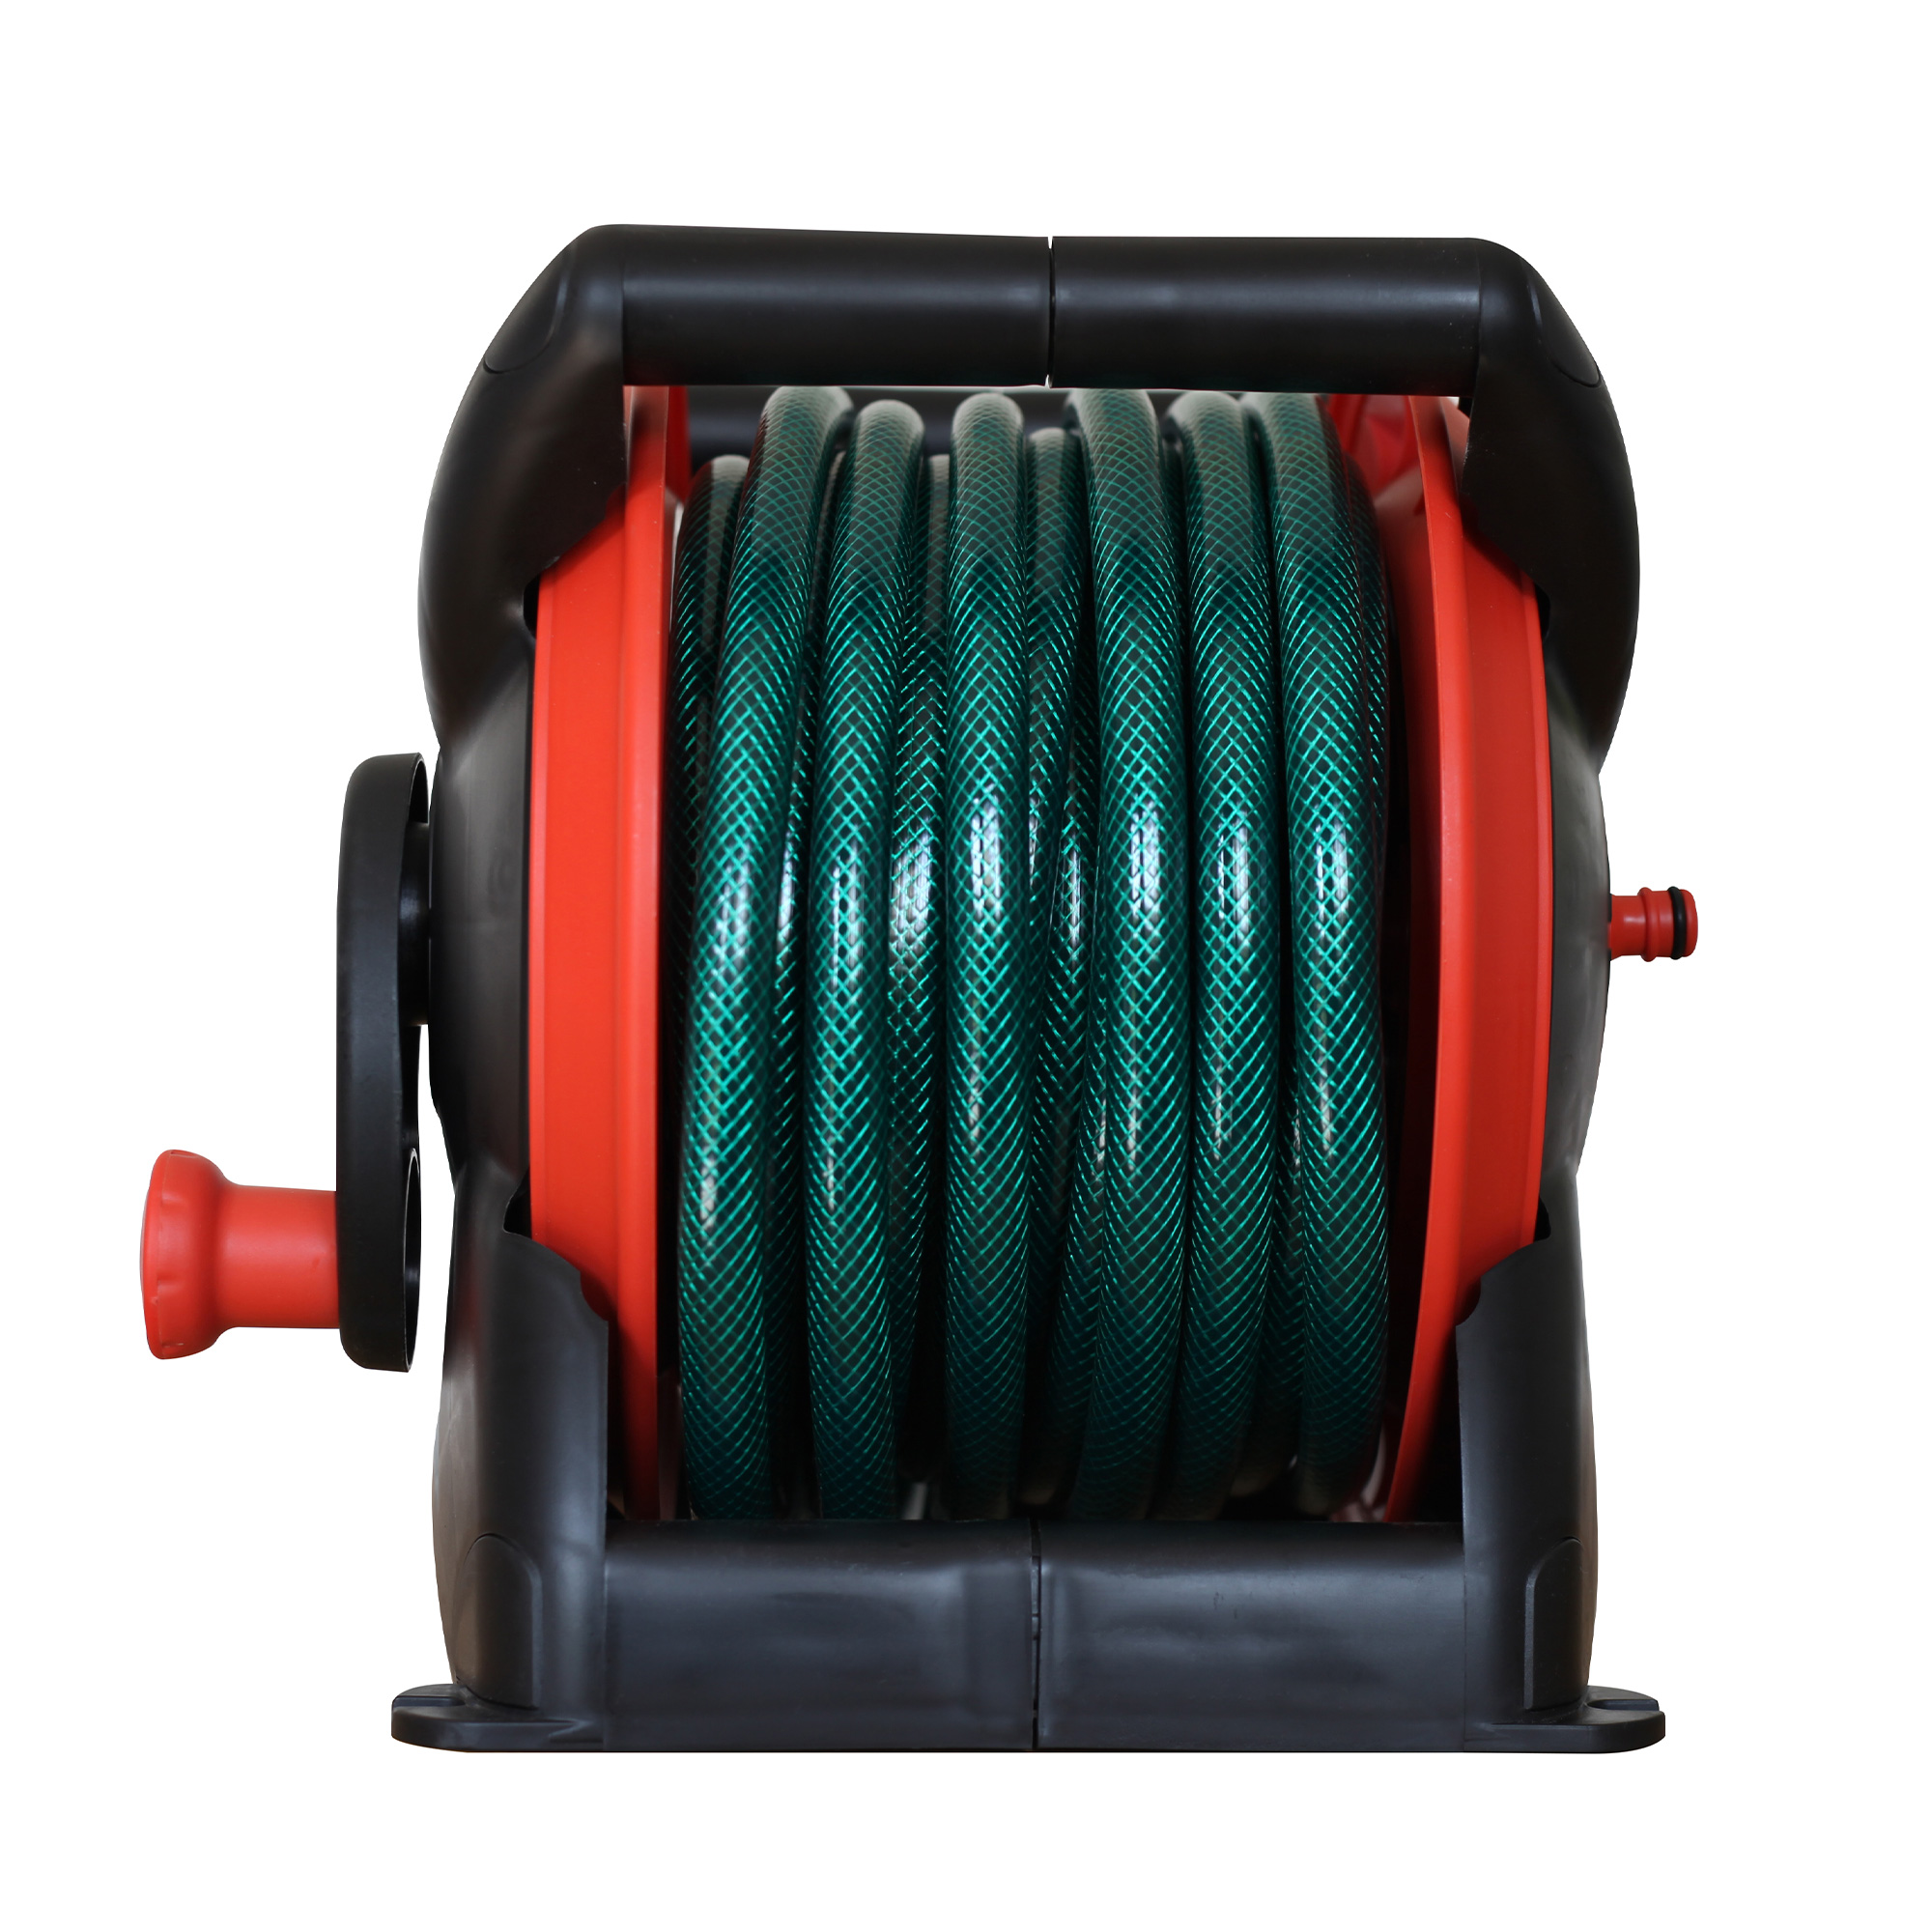 15m Garden hose reel with adaptor set